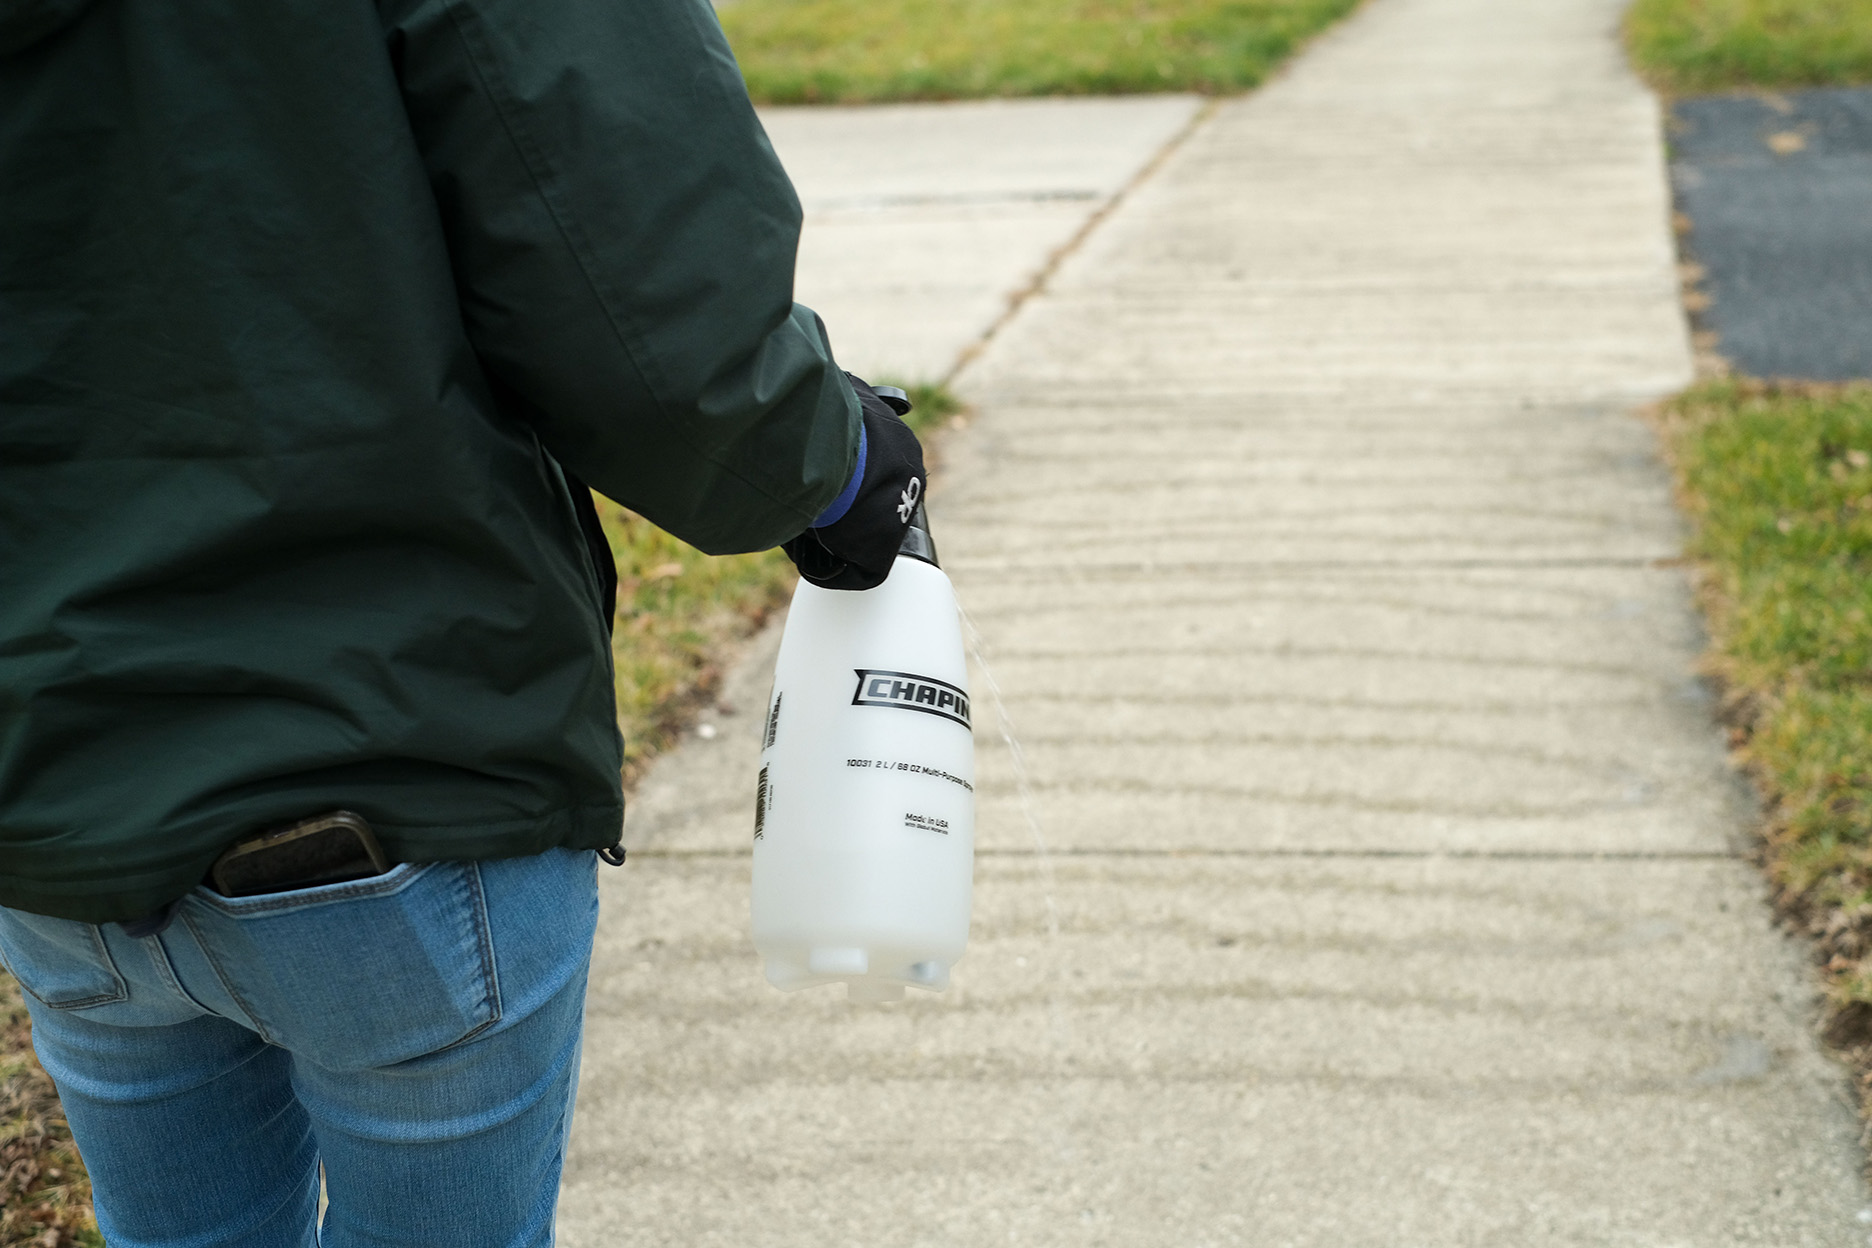 A person uses a handheld sprayer to spray brine on the sidewalk